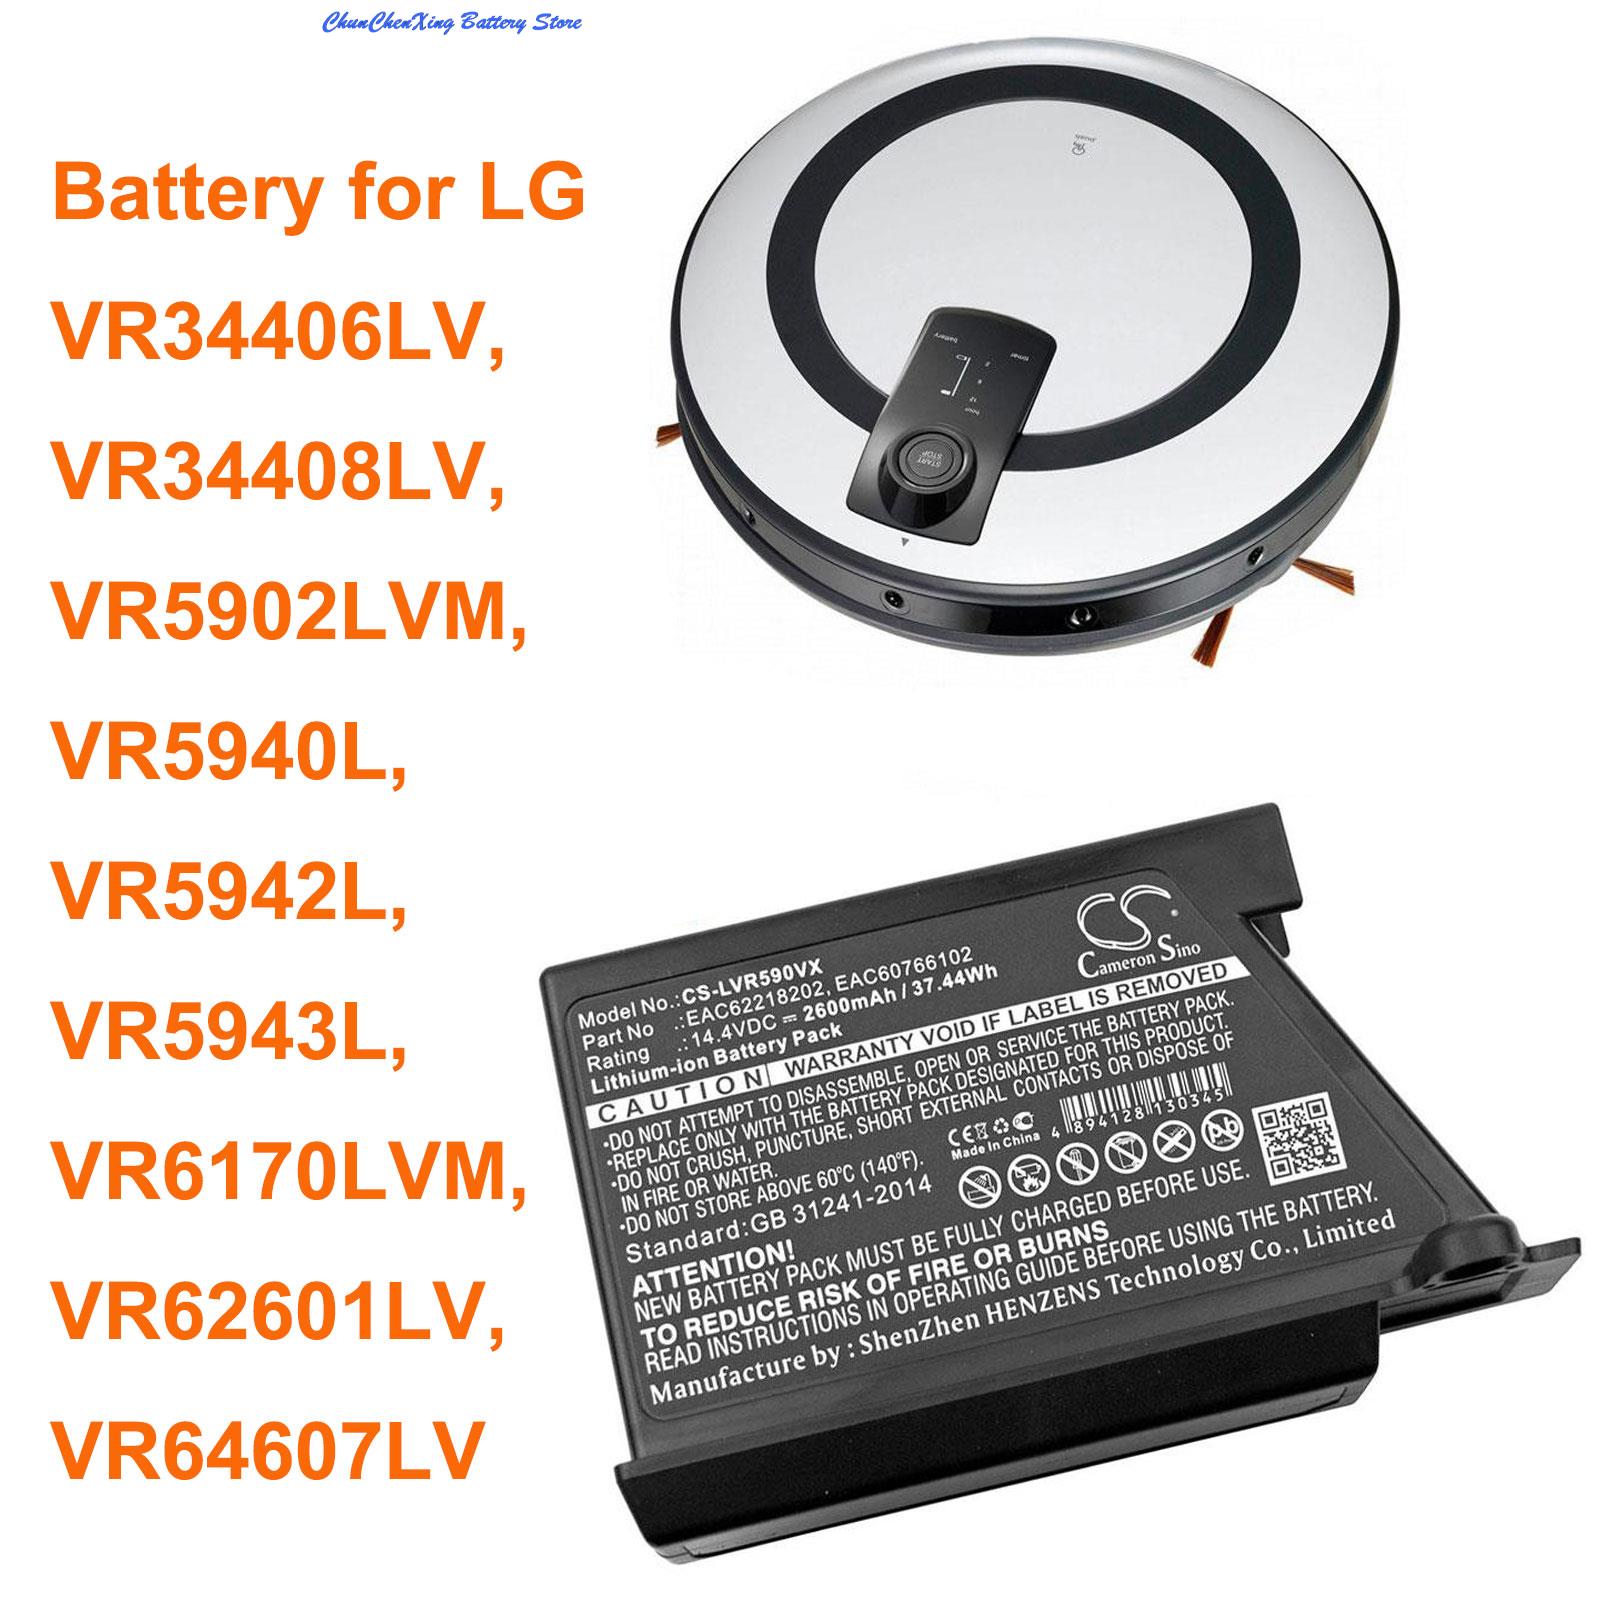 Cameron Sino-Batería de 2600mAh para LG VR34406LV, VR34408LV, VR5902LVM, VR5940L, VR5942L, VR6170LVM, VR62601LV, VR64607LV